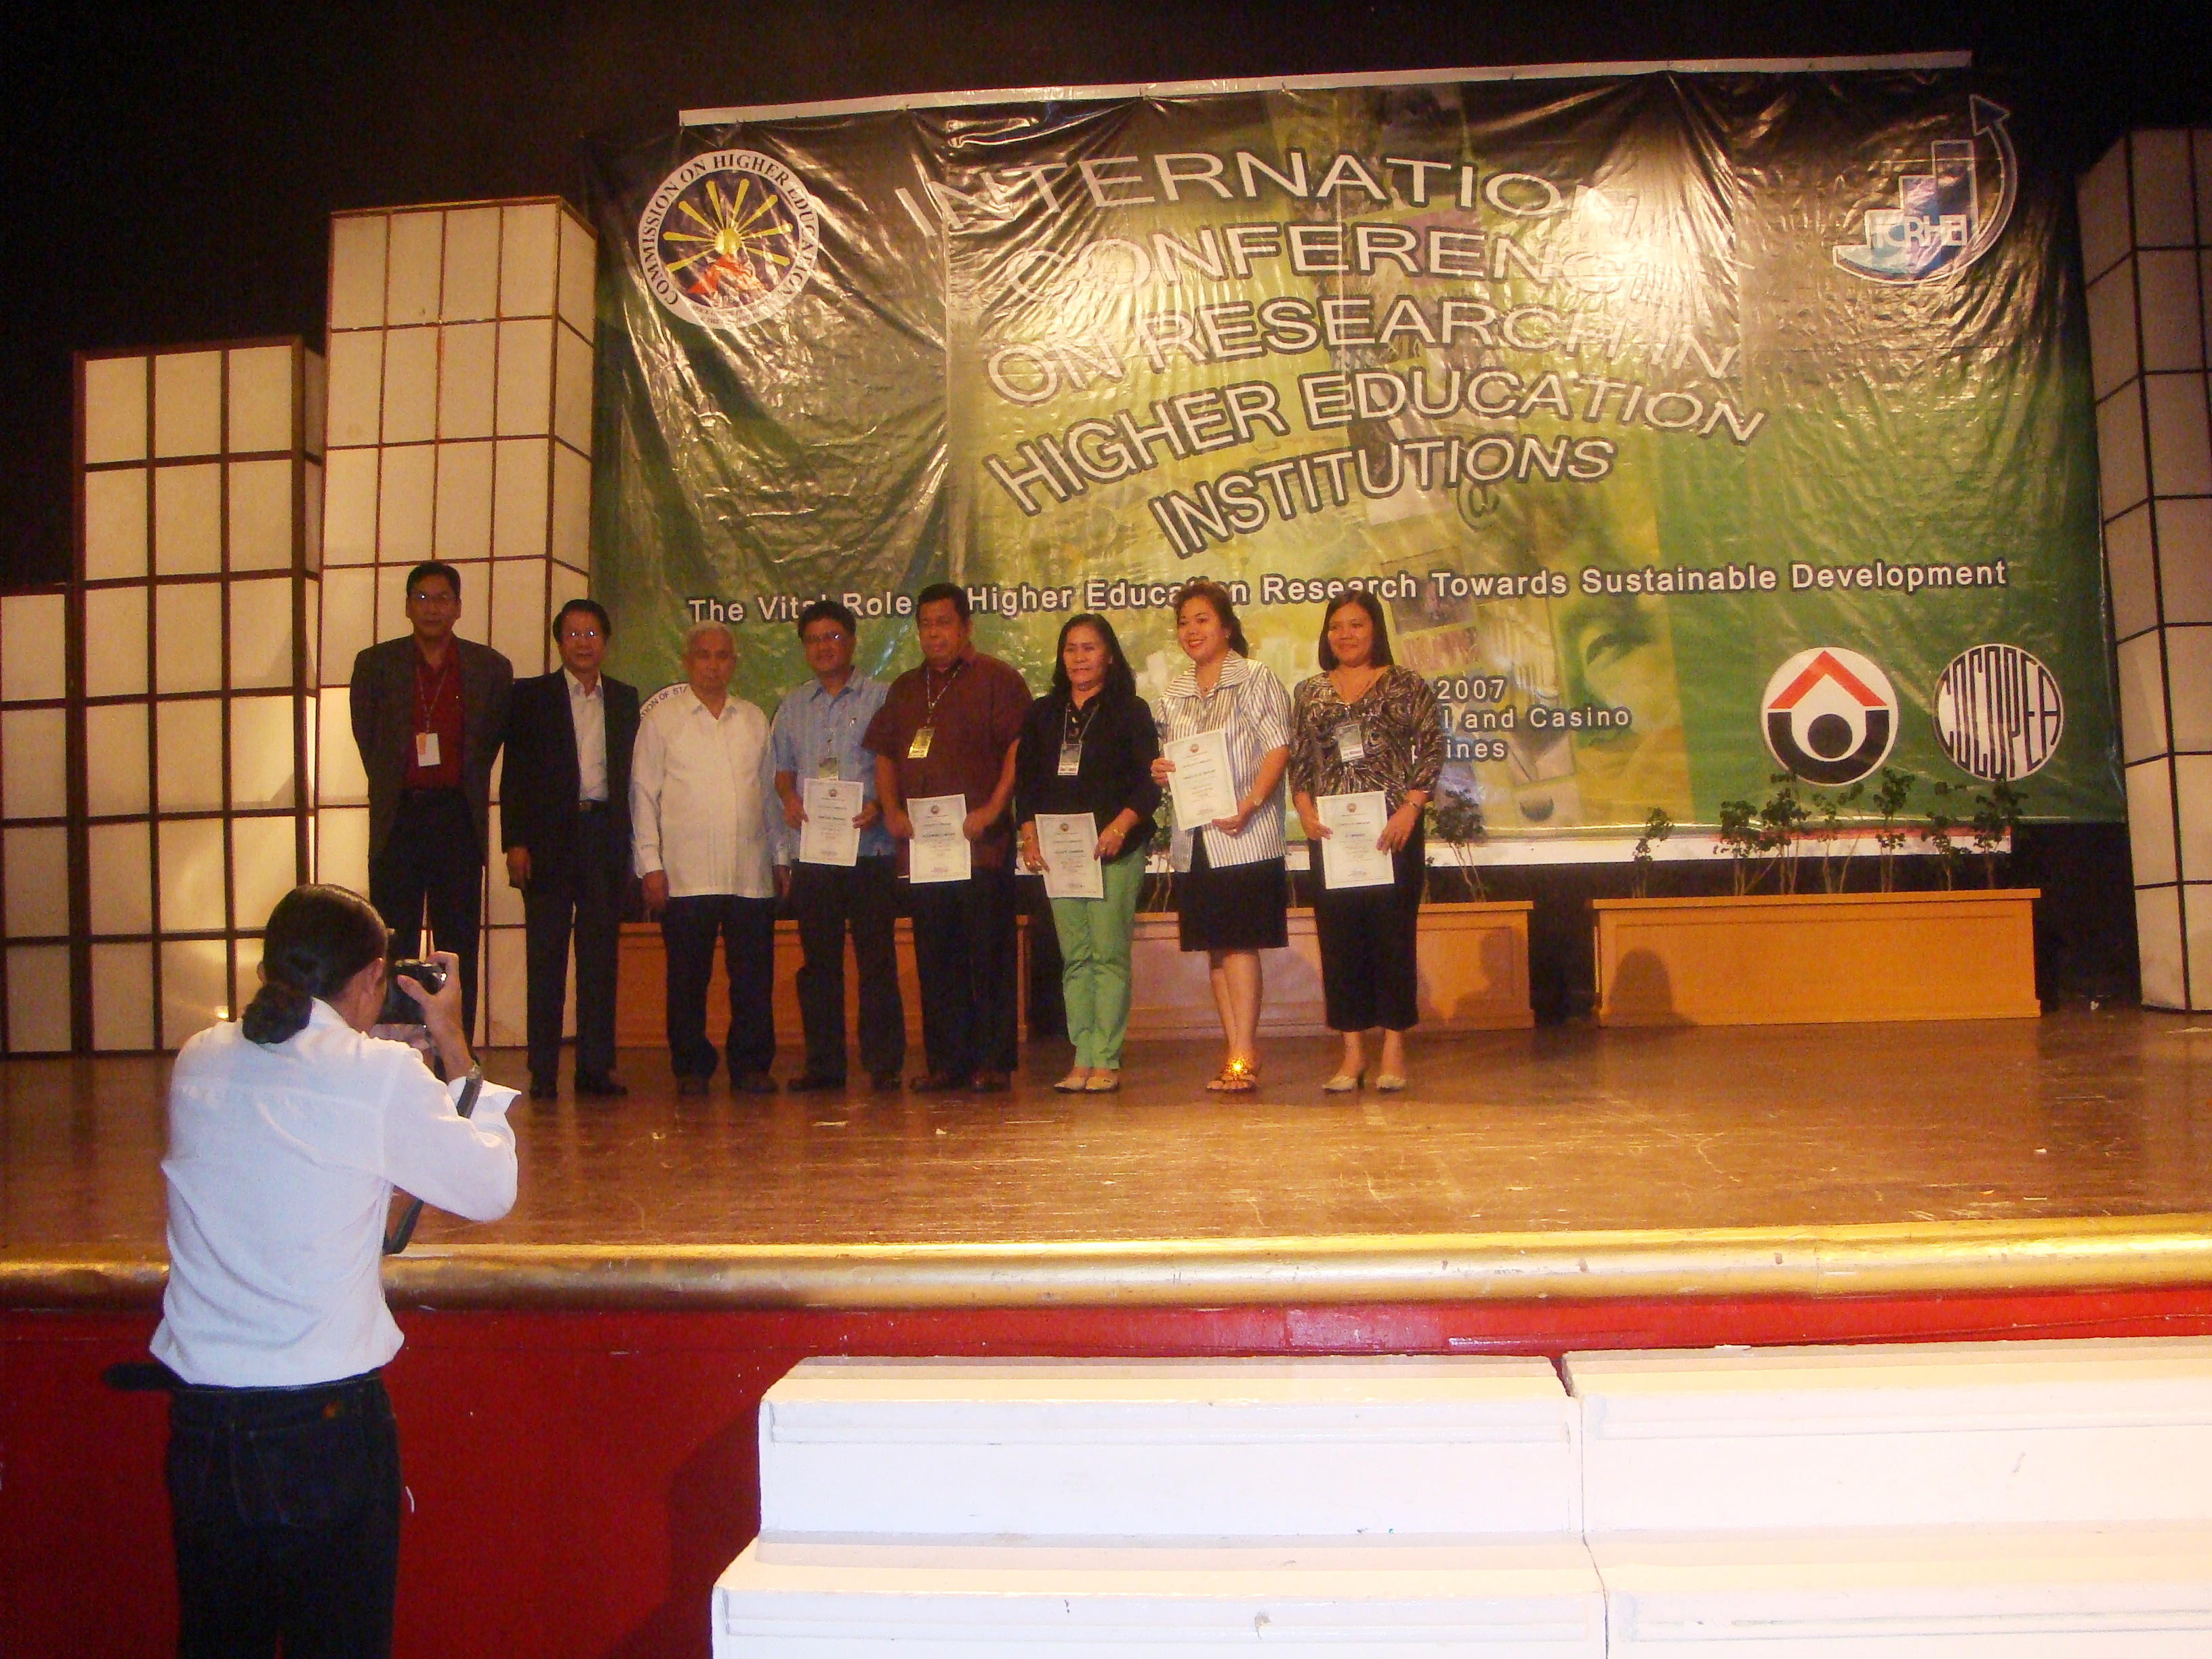 awarding of certificates for the speakers